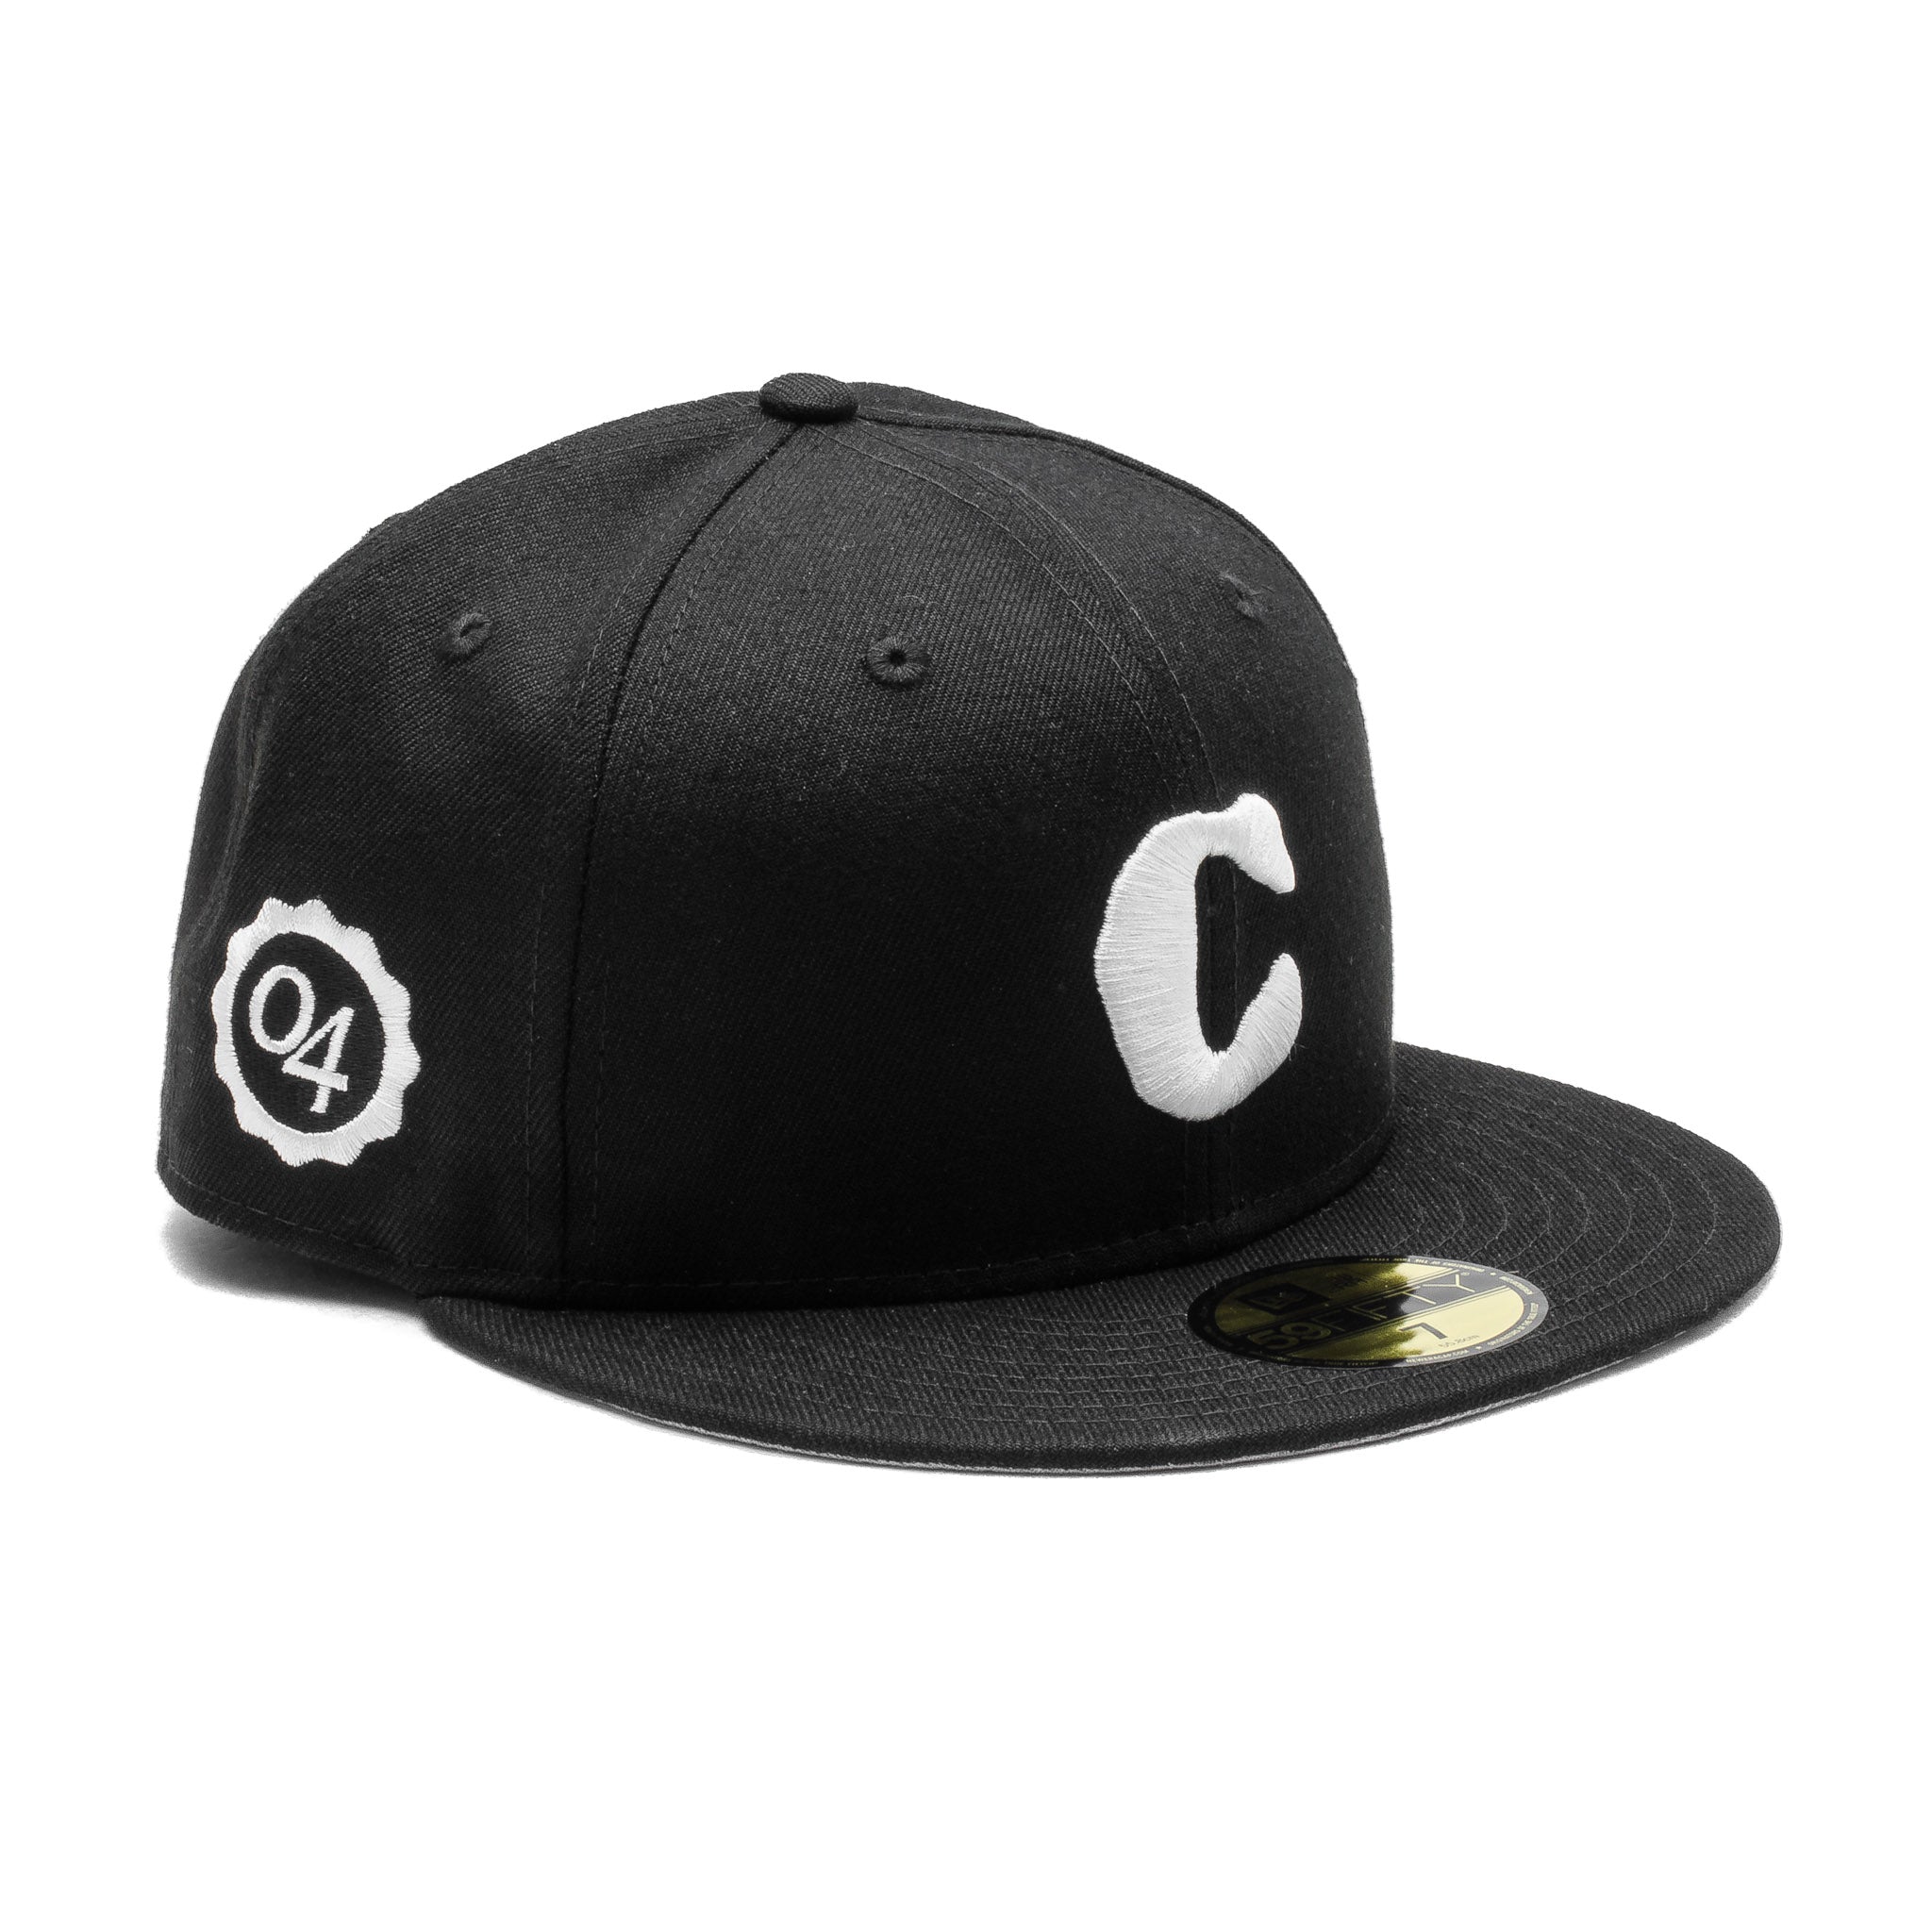 ShinShops Casper Logo x New Era Fitted Cap Black